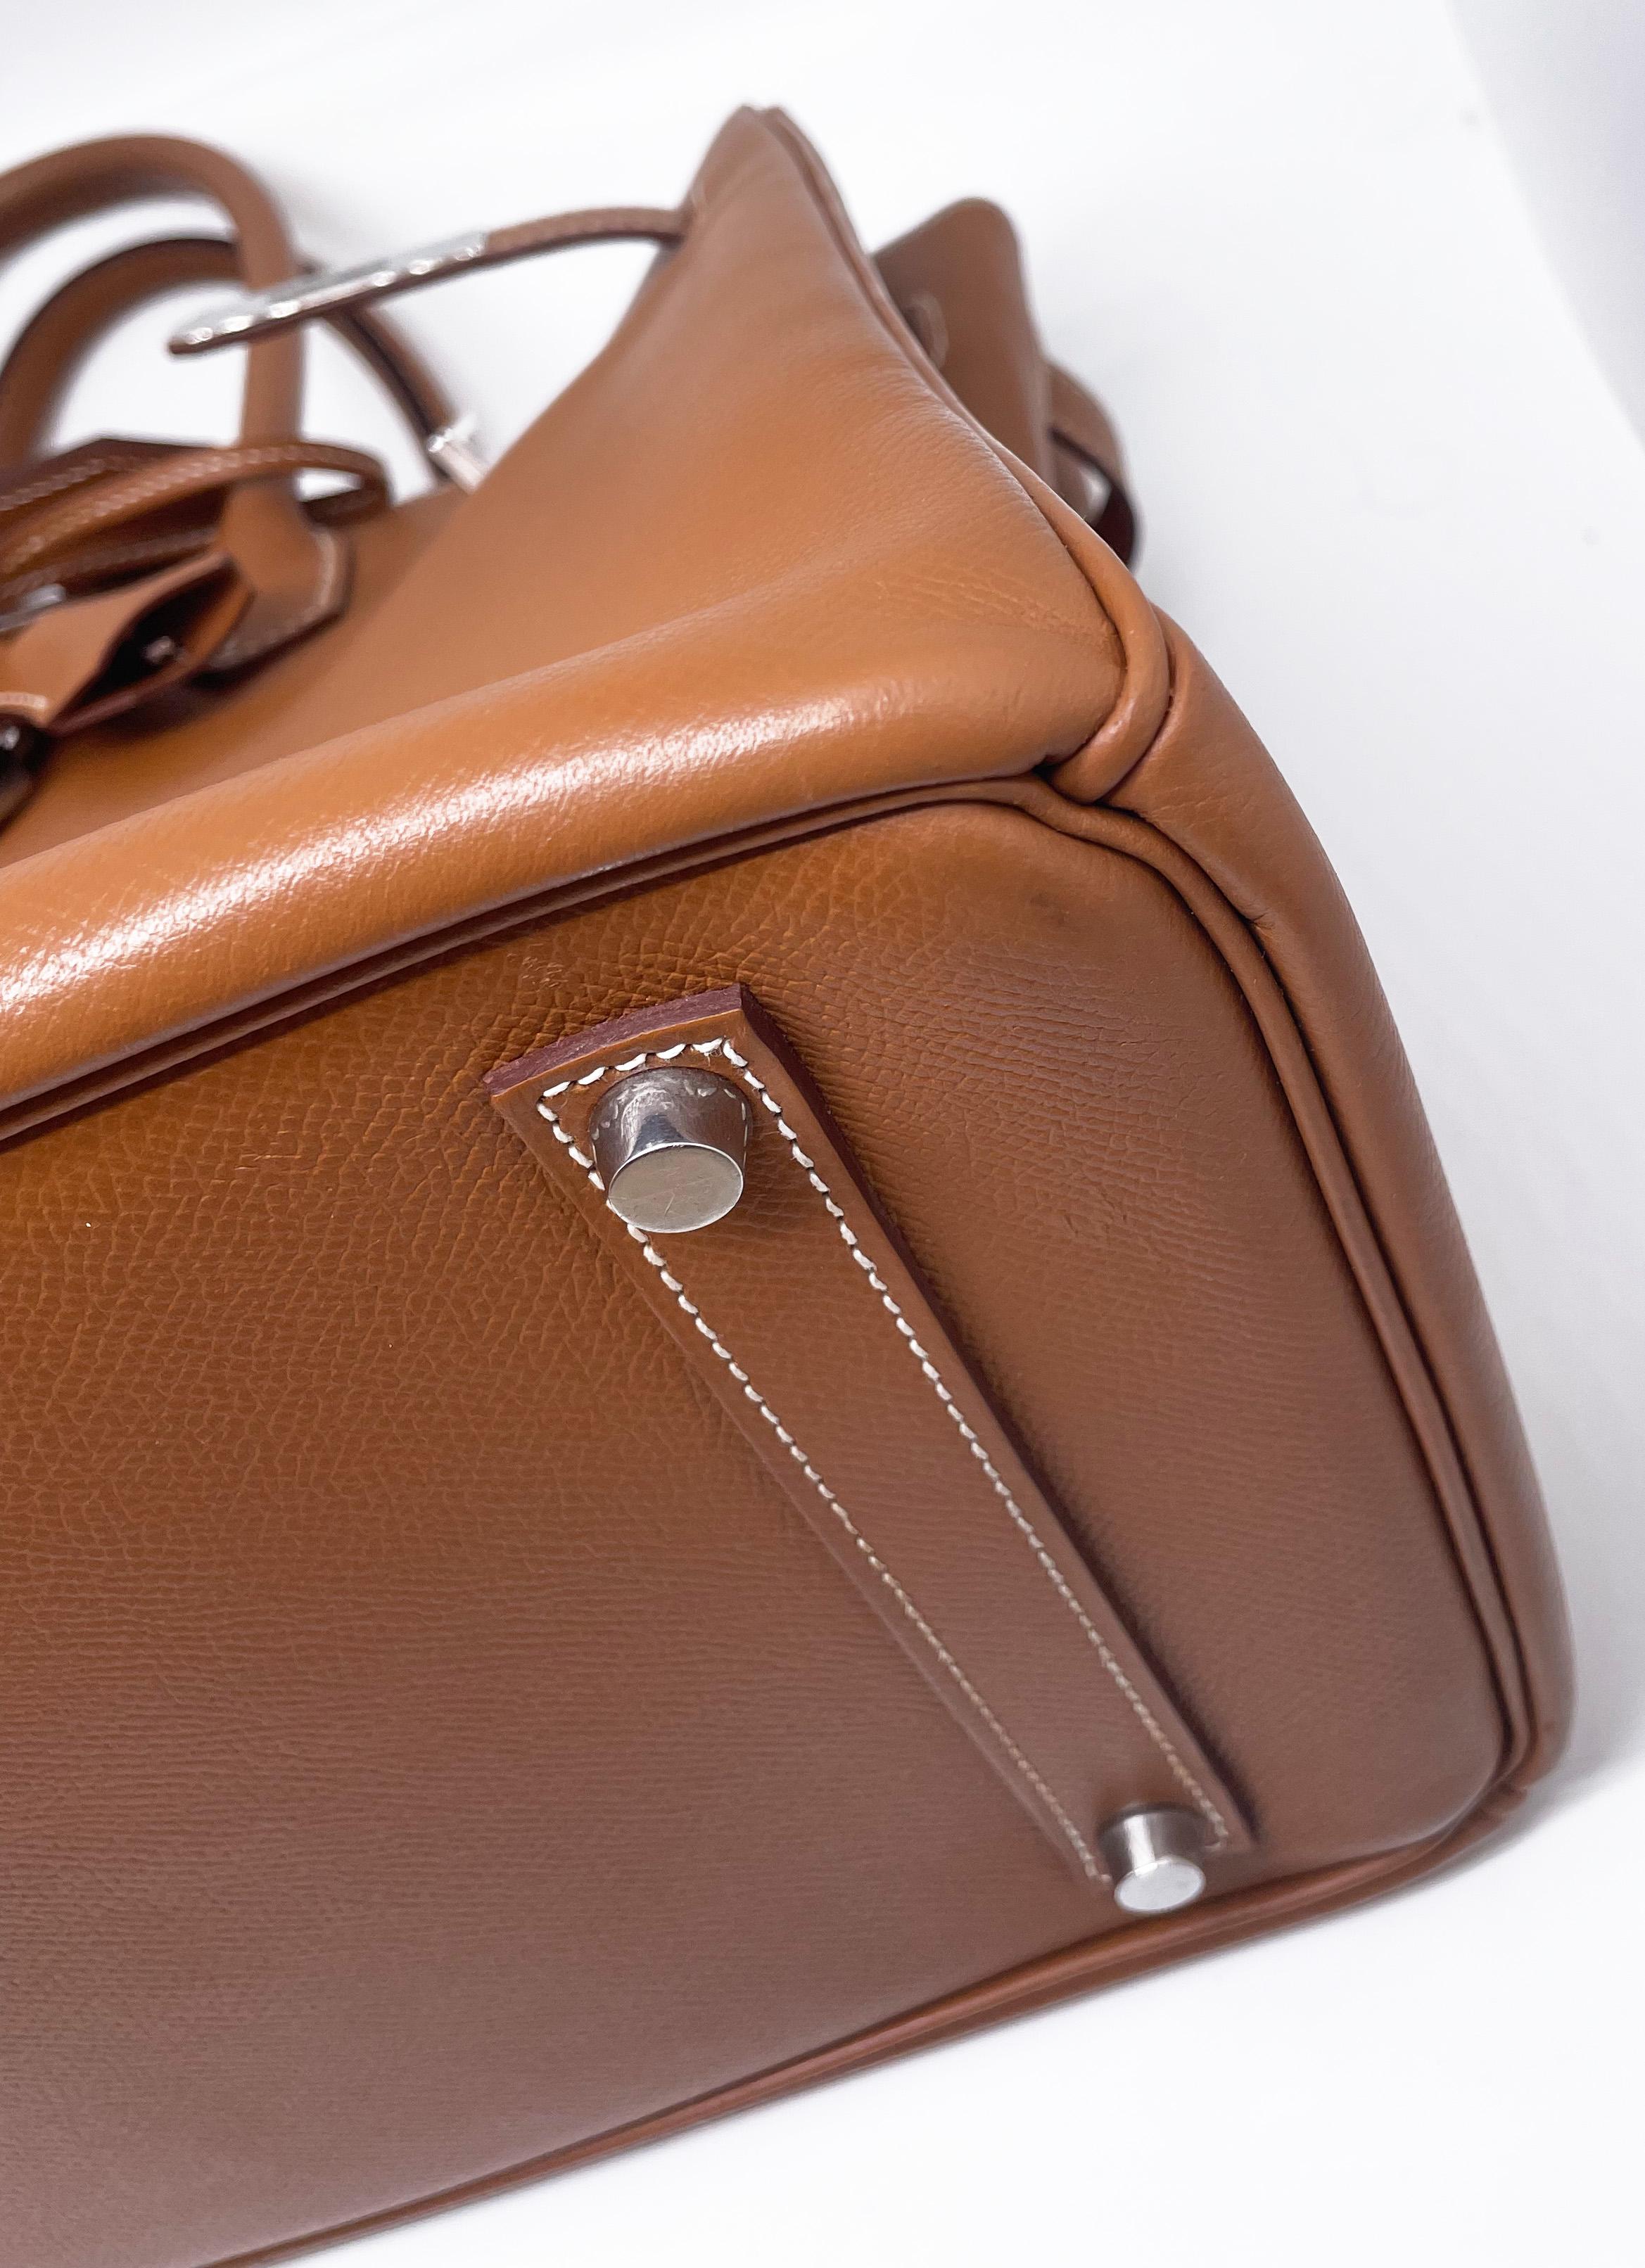 Hermès Birkin 35 Gold handbag in Espom leather and white stitching 4